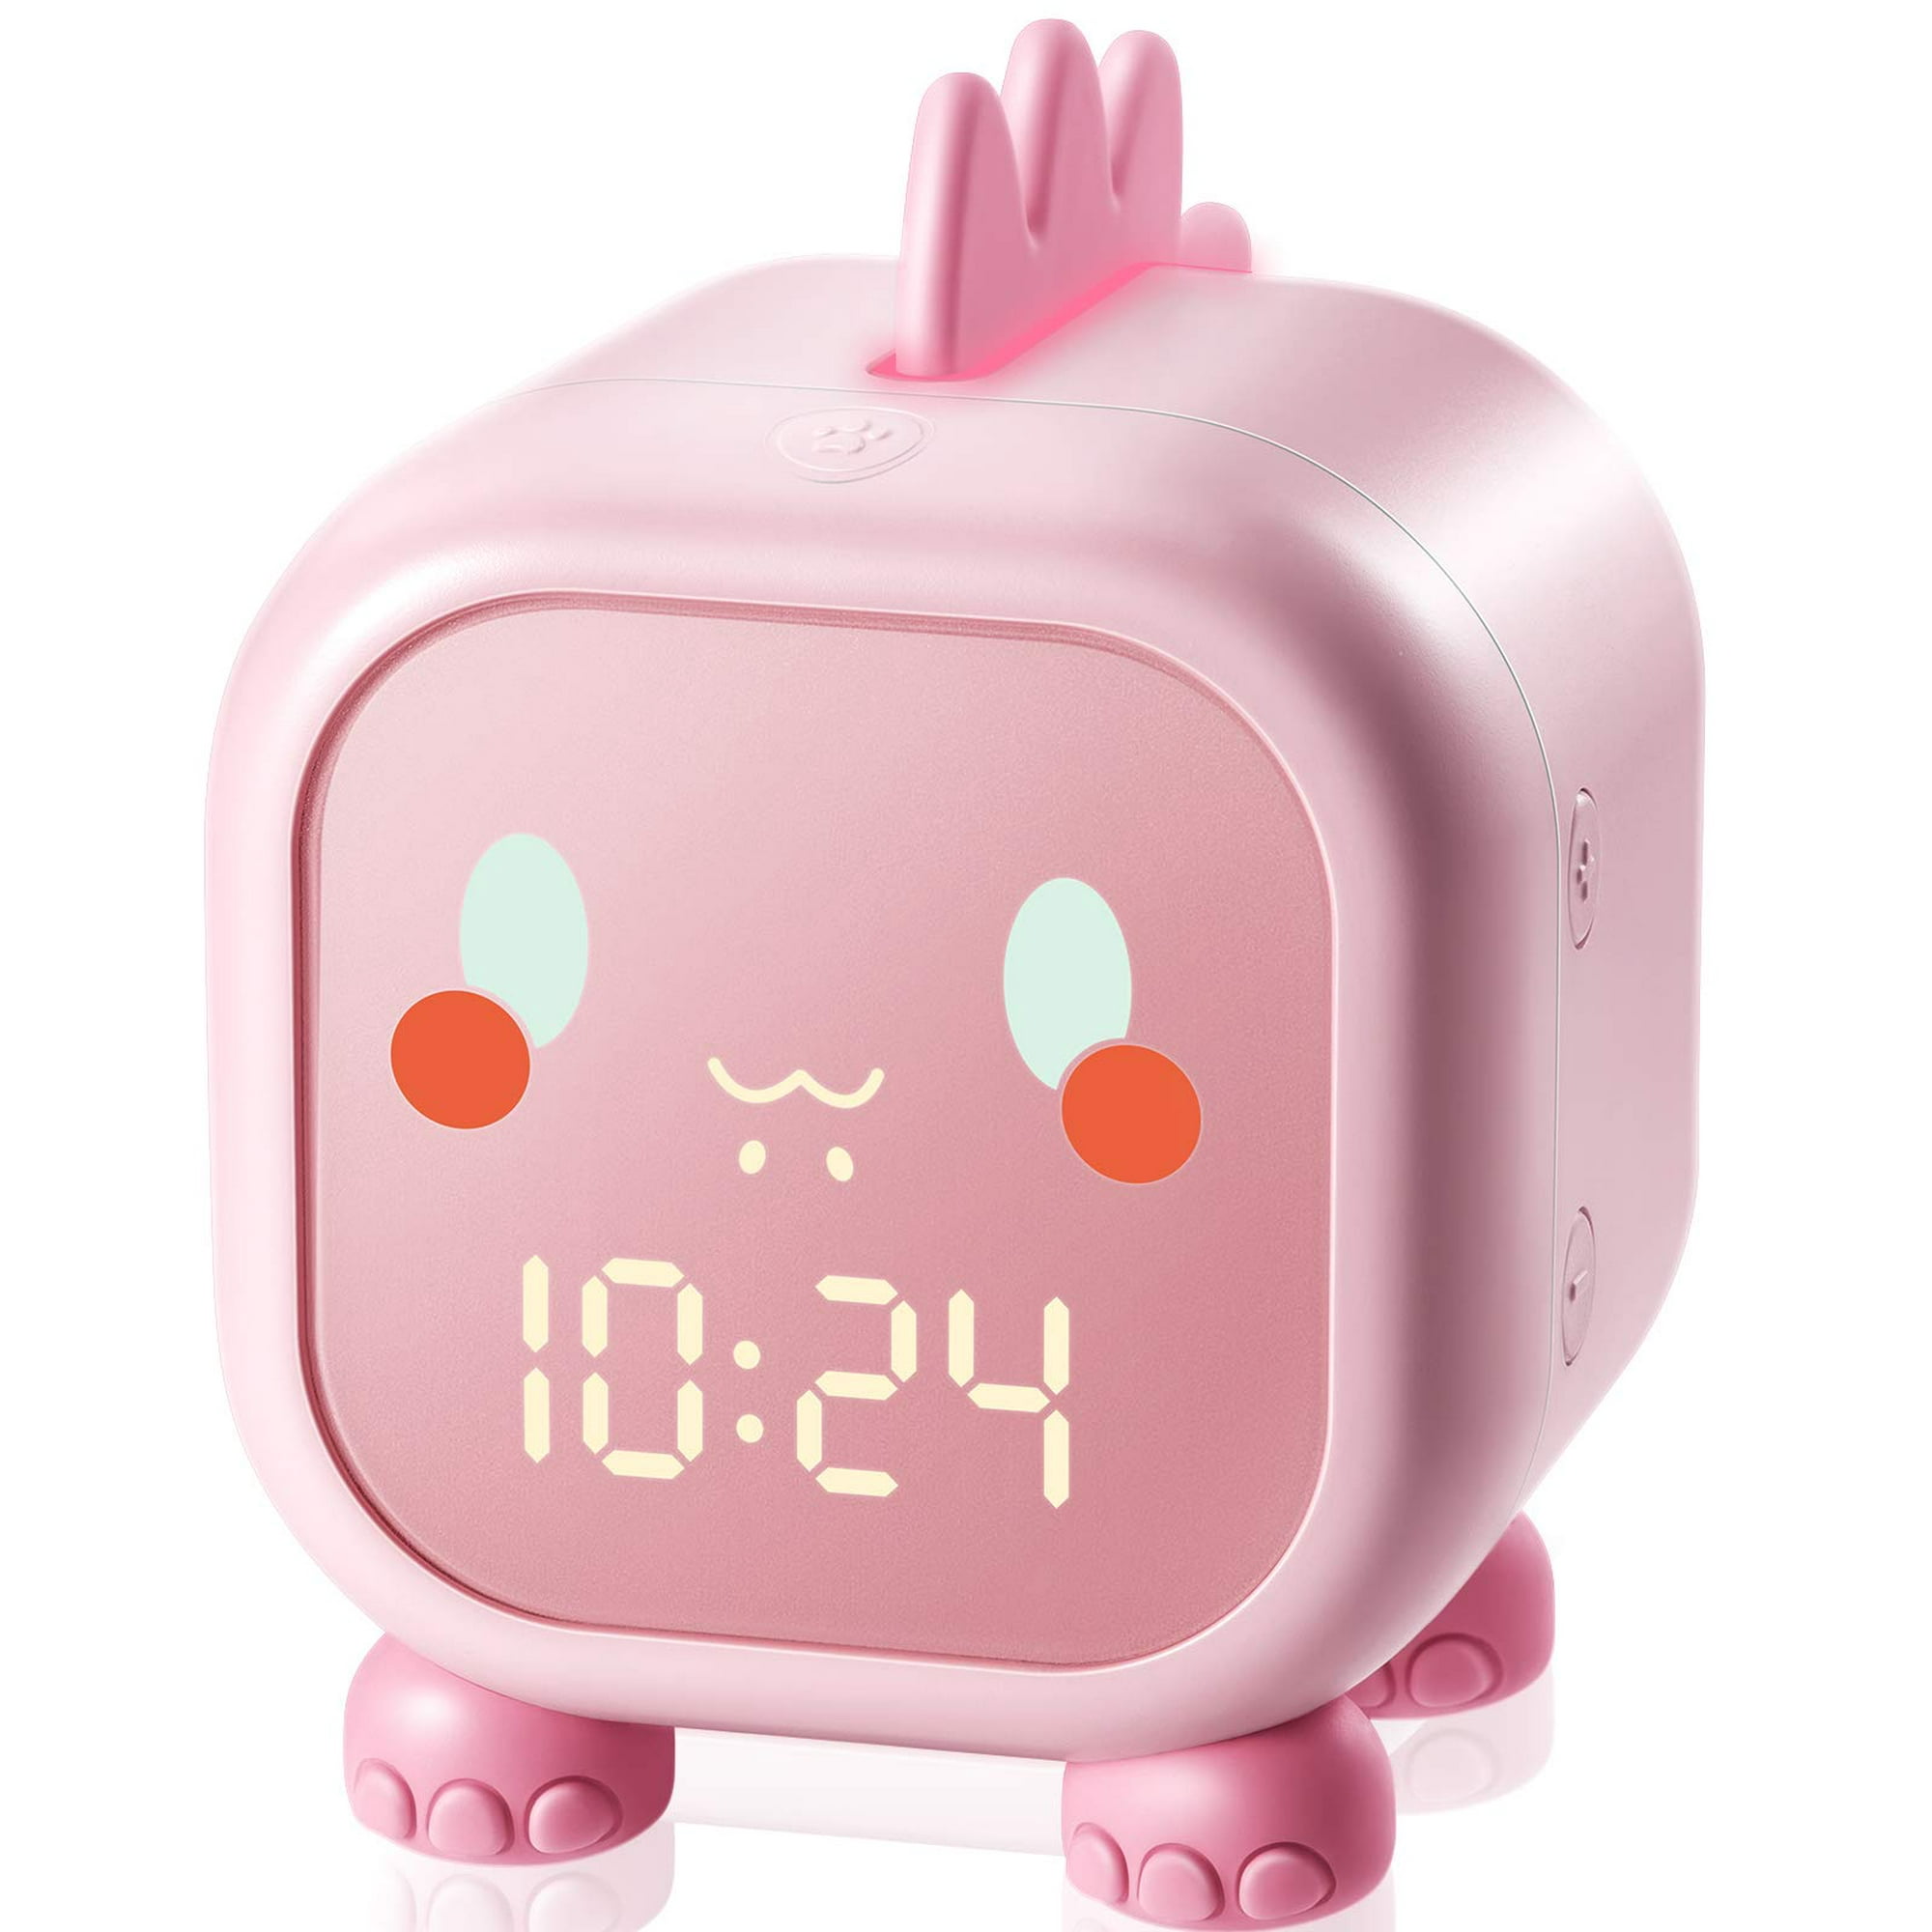  Reloj despertador para niños, reloj despertador digital para  niños, lindo reloj despertador de conejo para niñas, reloj despertador de  ruido blanco, luz nocturna con USB, reloj despertador infantil para  dormitorio de